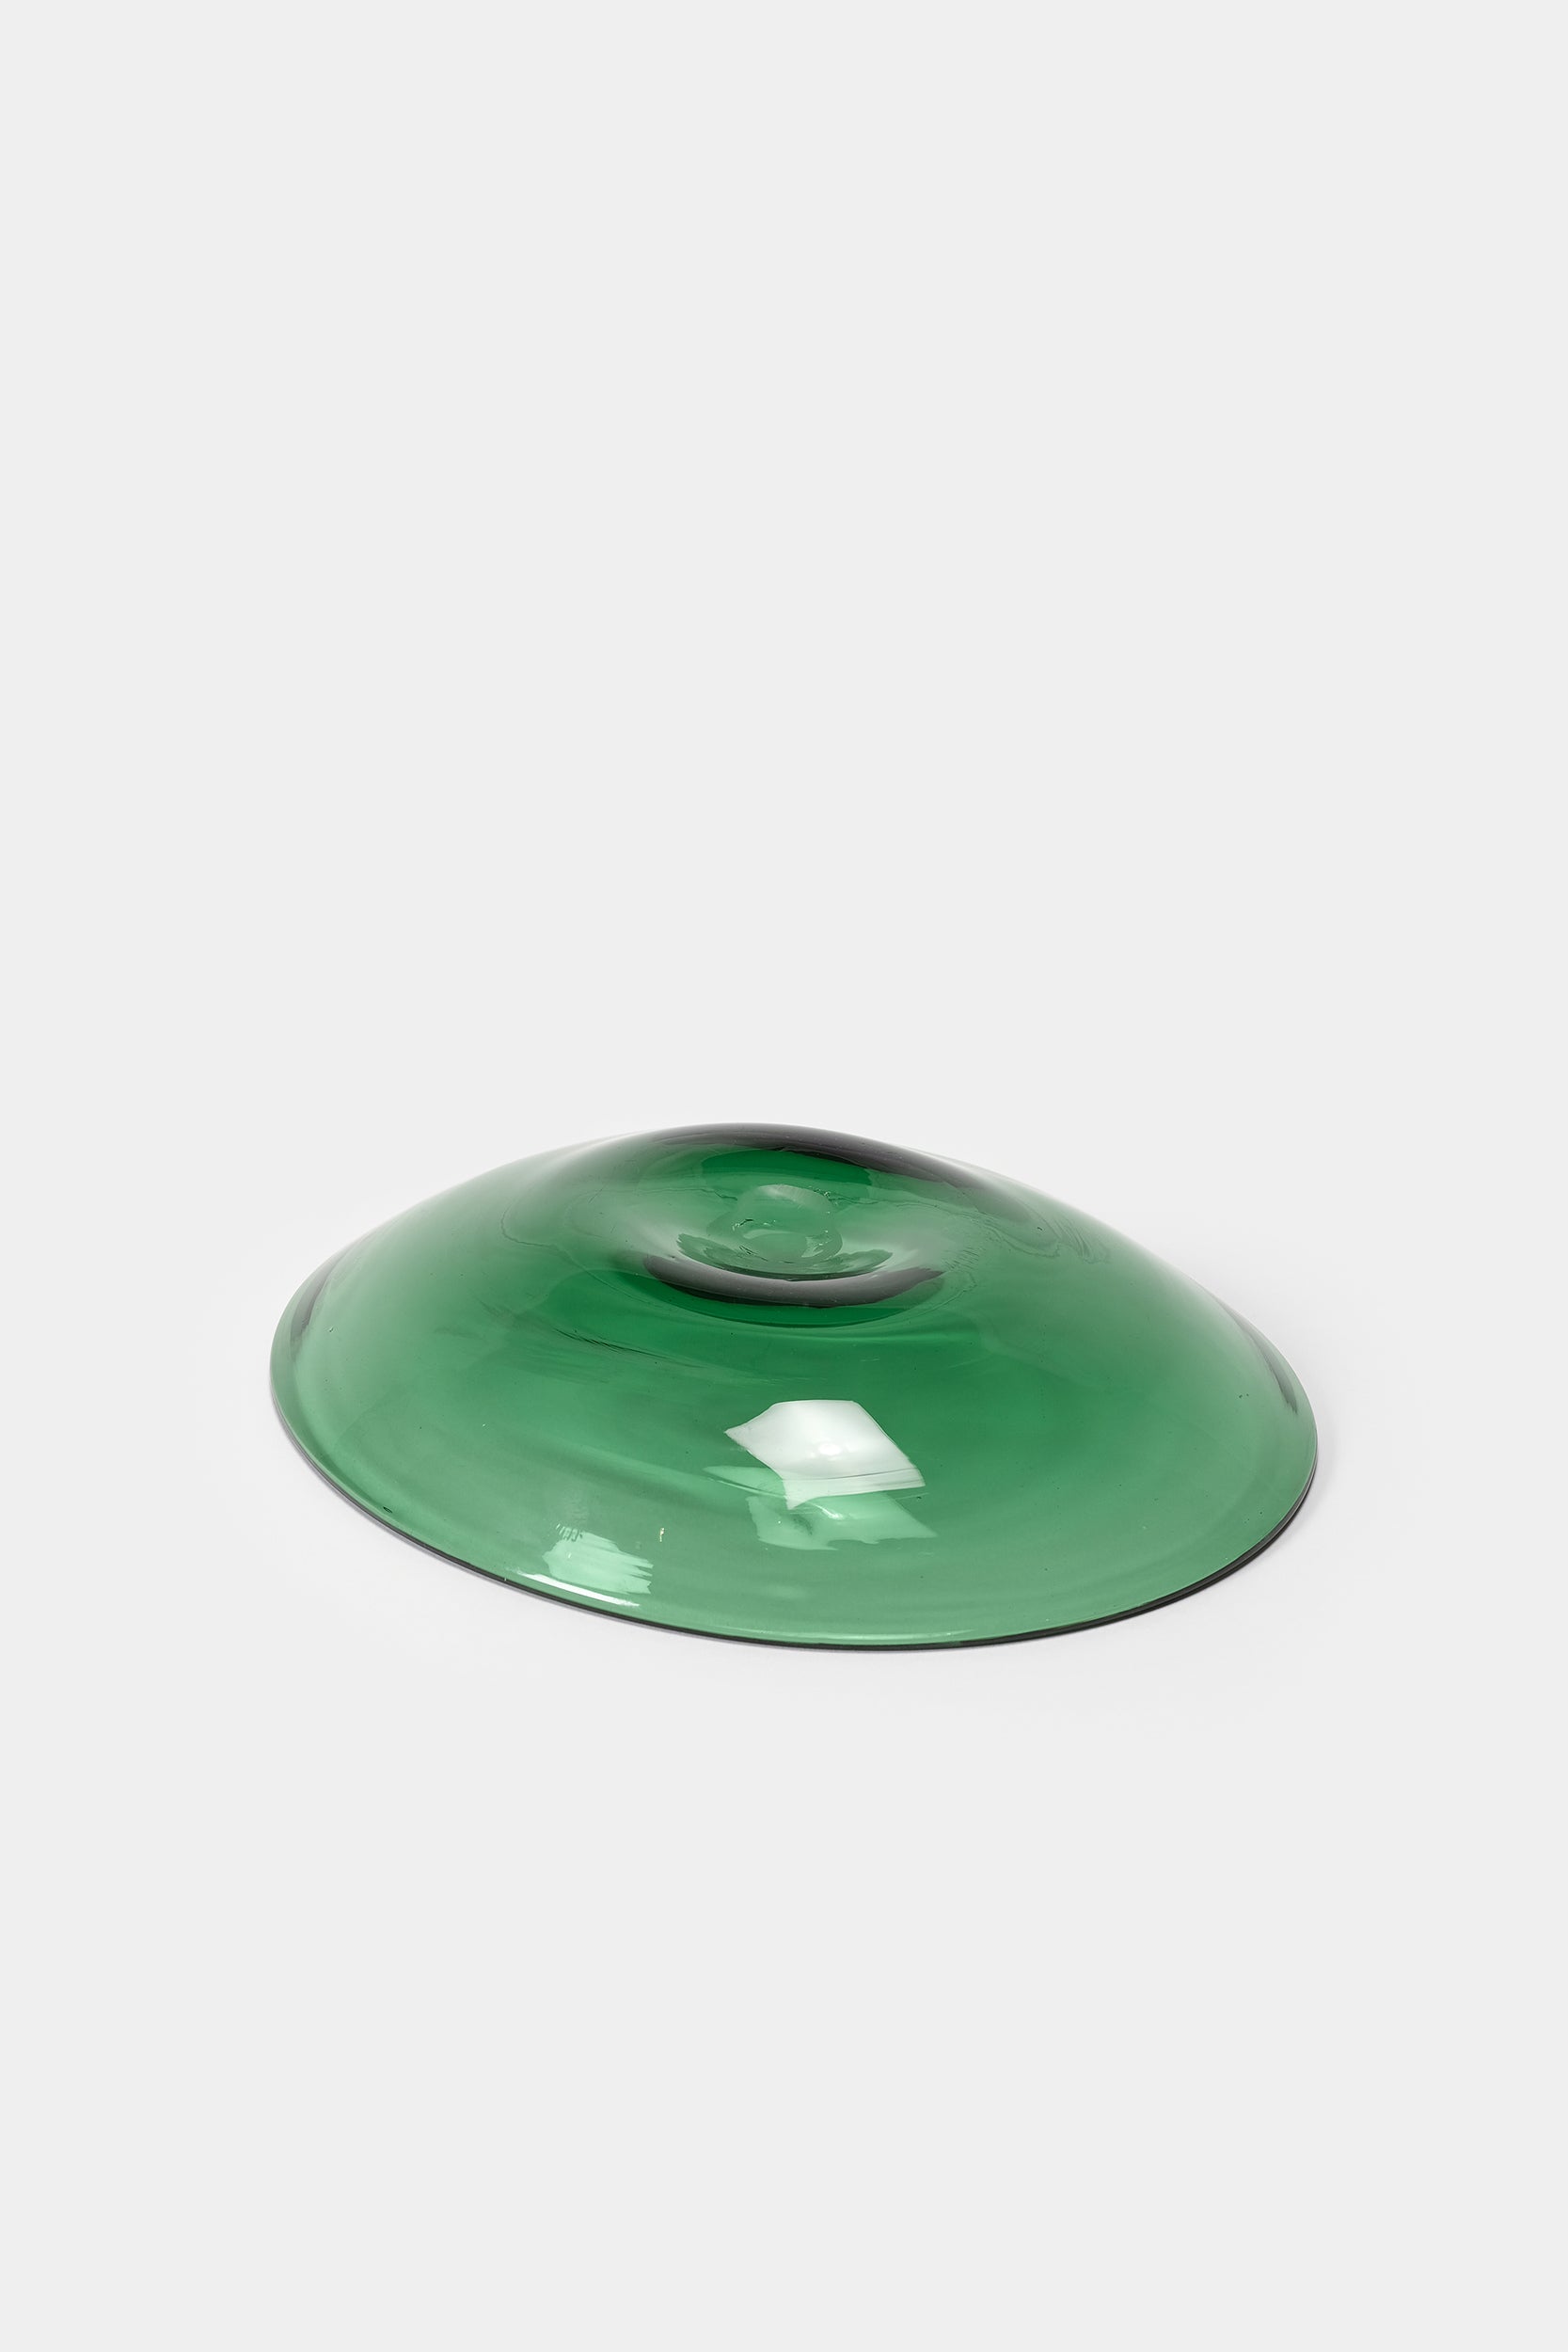 Bowl, Vetro Verde di Empoli, Italy, 50s